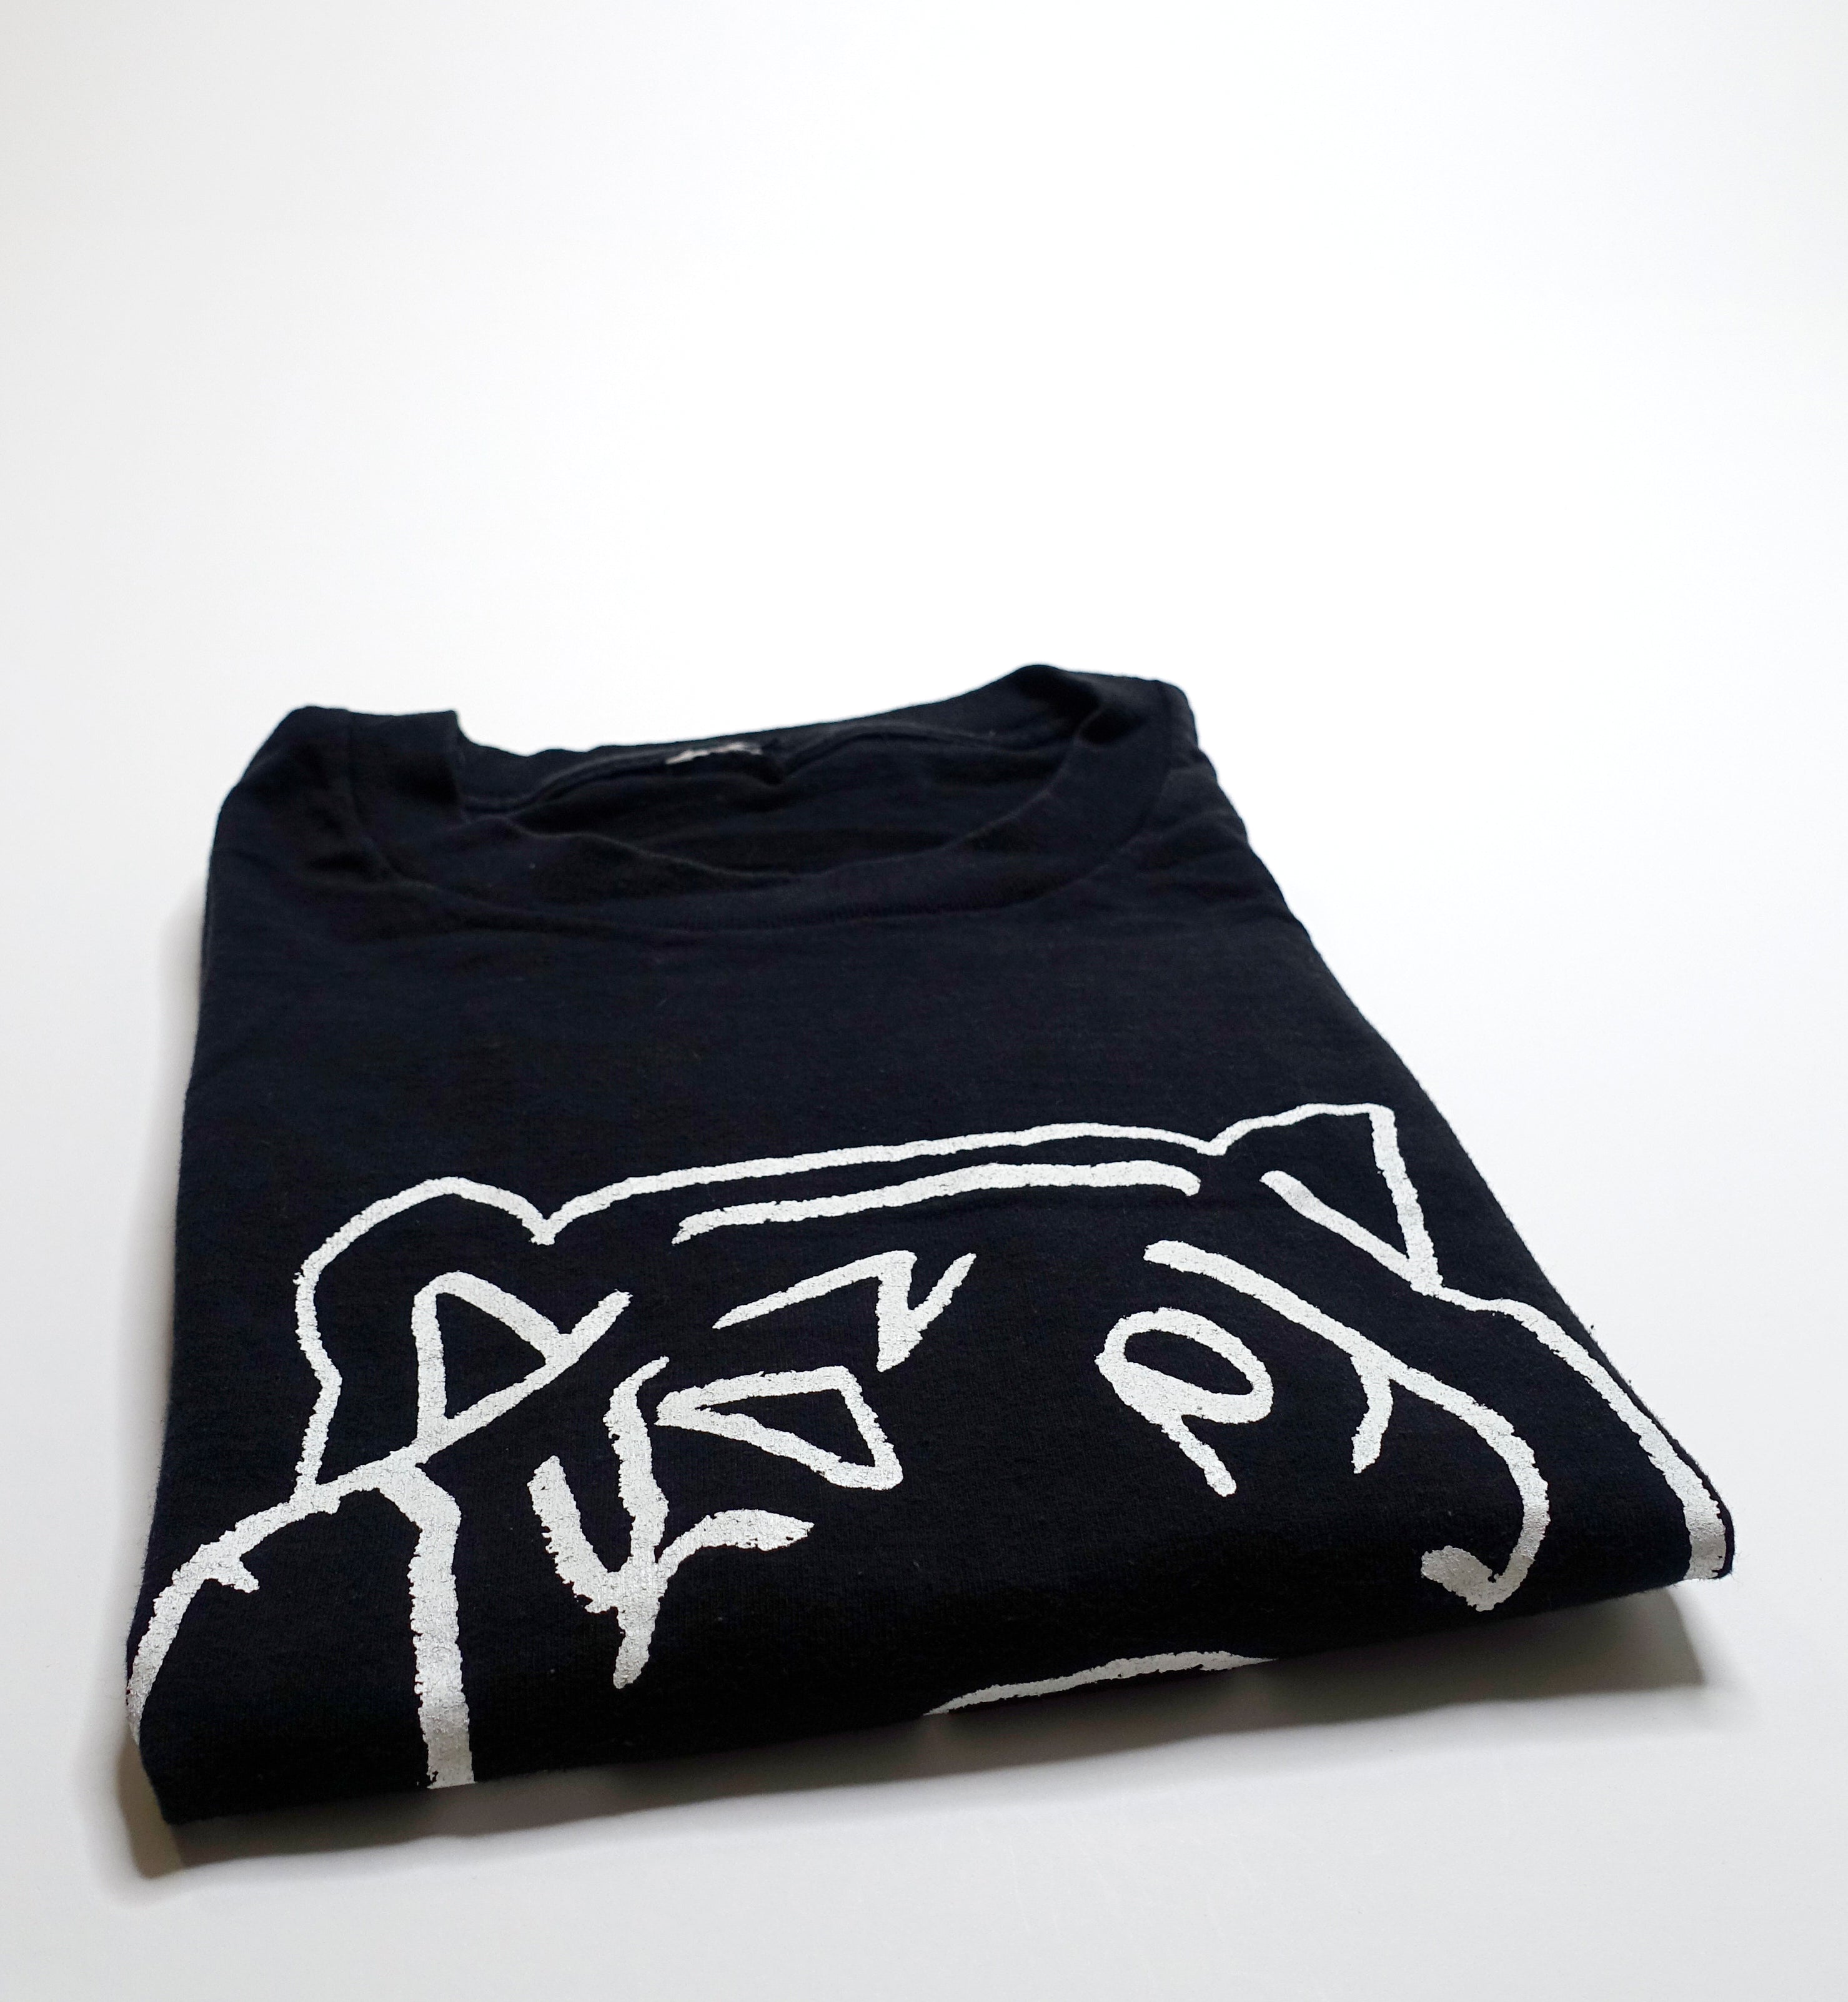 Le Tigre - Tiger / Feminist Sweepstakes 2001 Tour Shirt Size XL